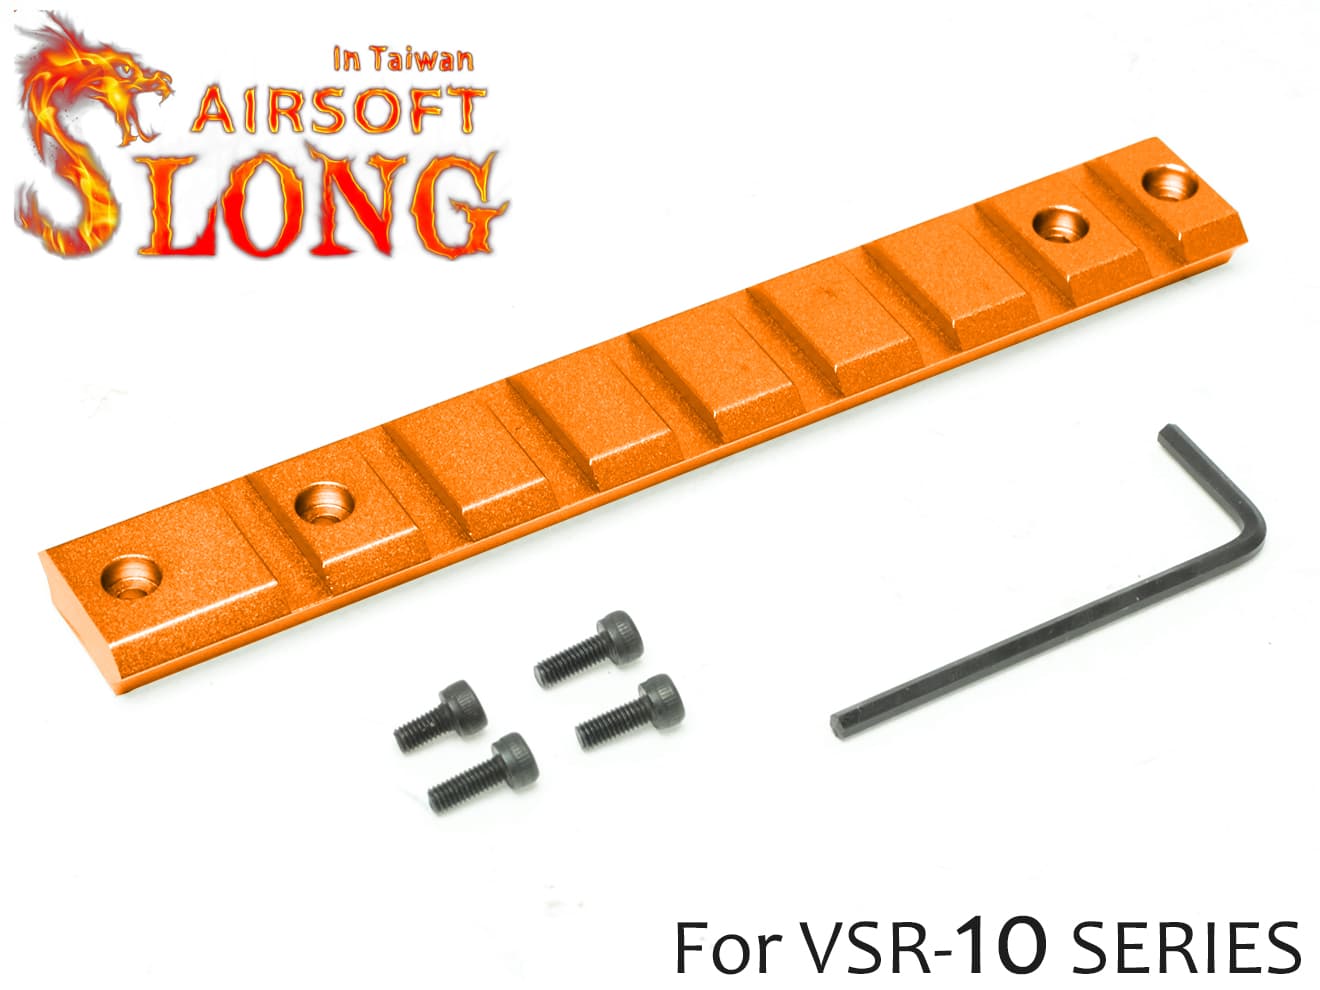 SLONG AIRSOFT VSR-10 スコープマウントレール◆OR 東京マルイ VSR10シリーズ対応 純正互換形状 リペア 補修 20mmレイル アルミ製 軽量化 オレンジ